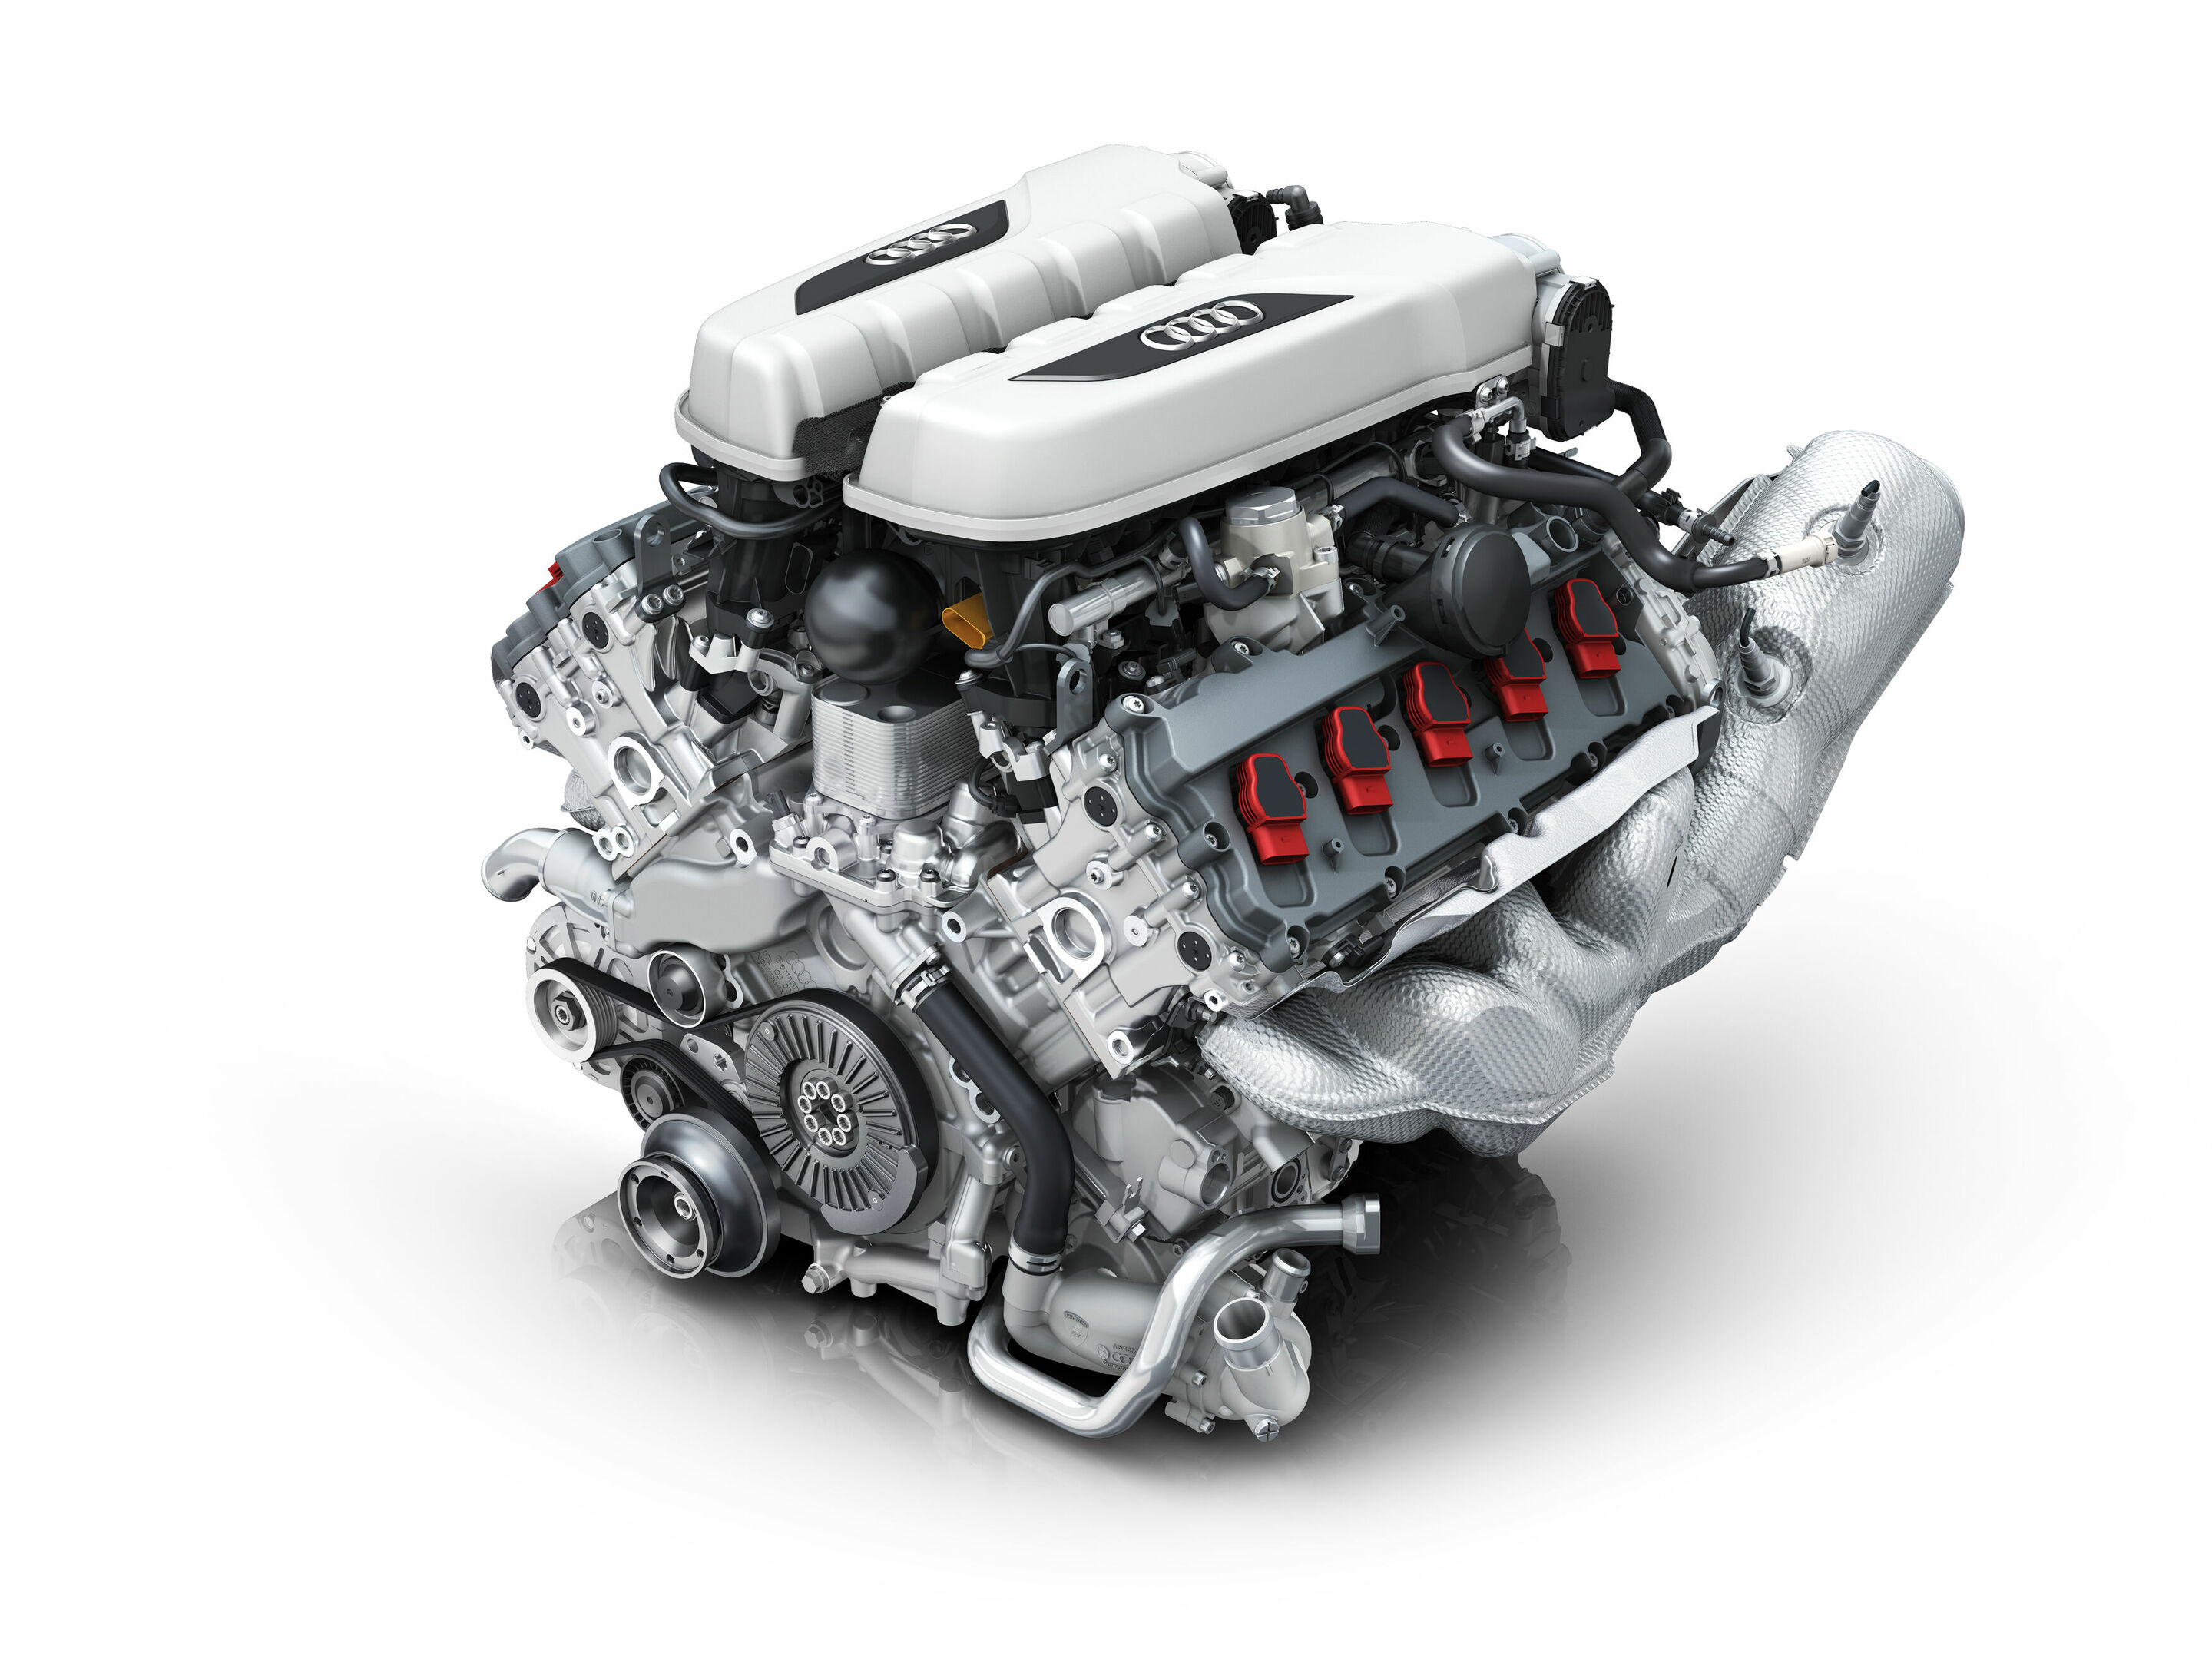 Das Herz des Audi R8: der V10-Saugmotor